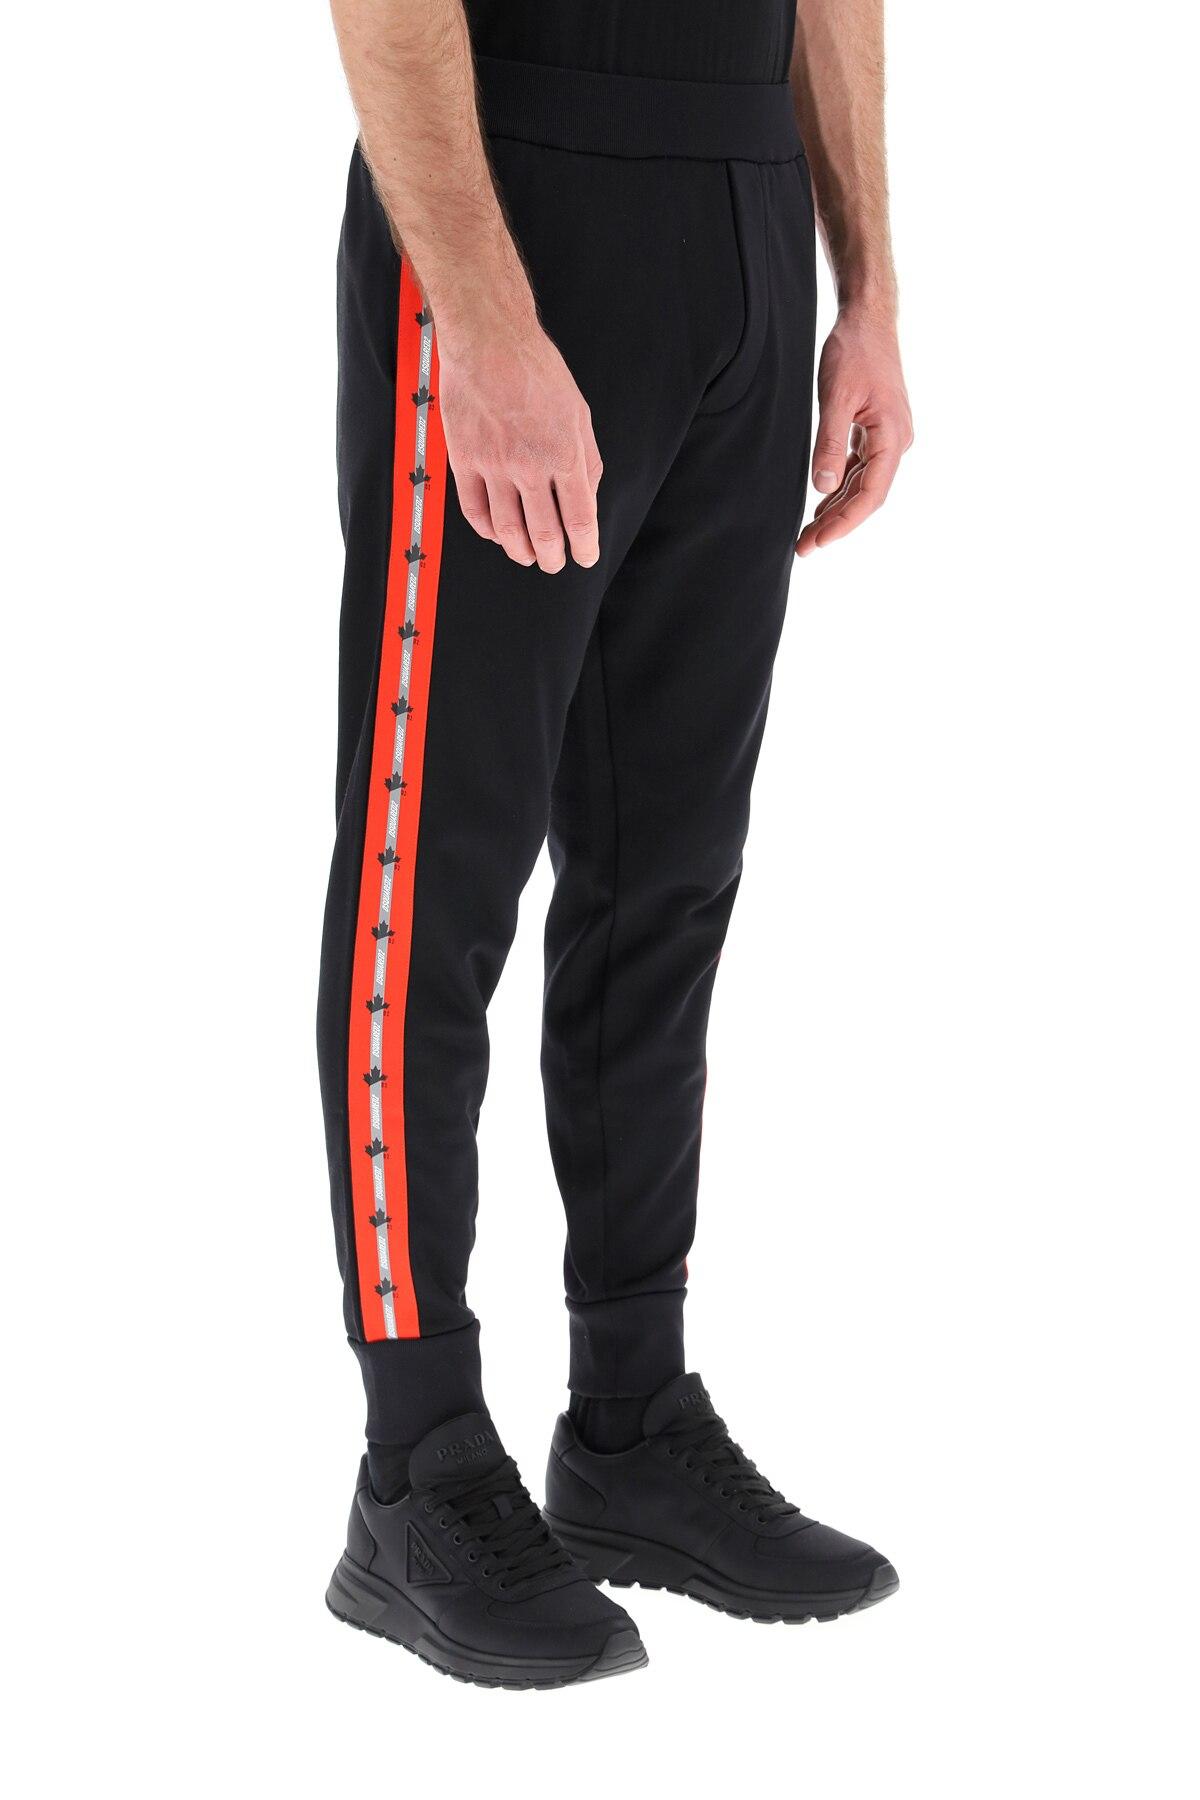 DSquared² Cotton Techno Tape Sweatpants in Black,Red (Black) for 